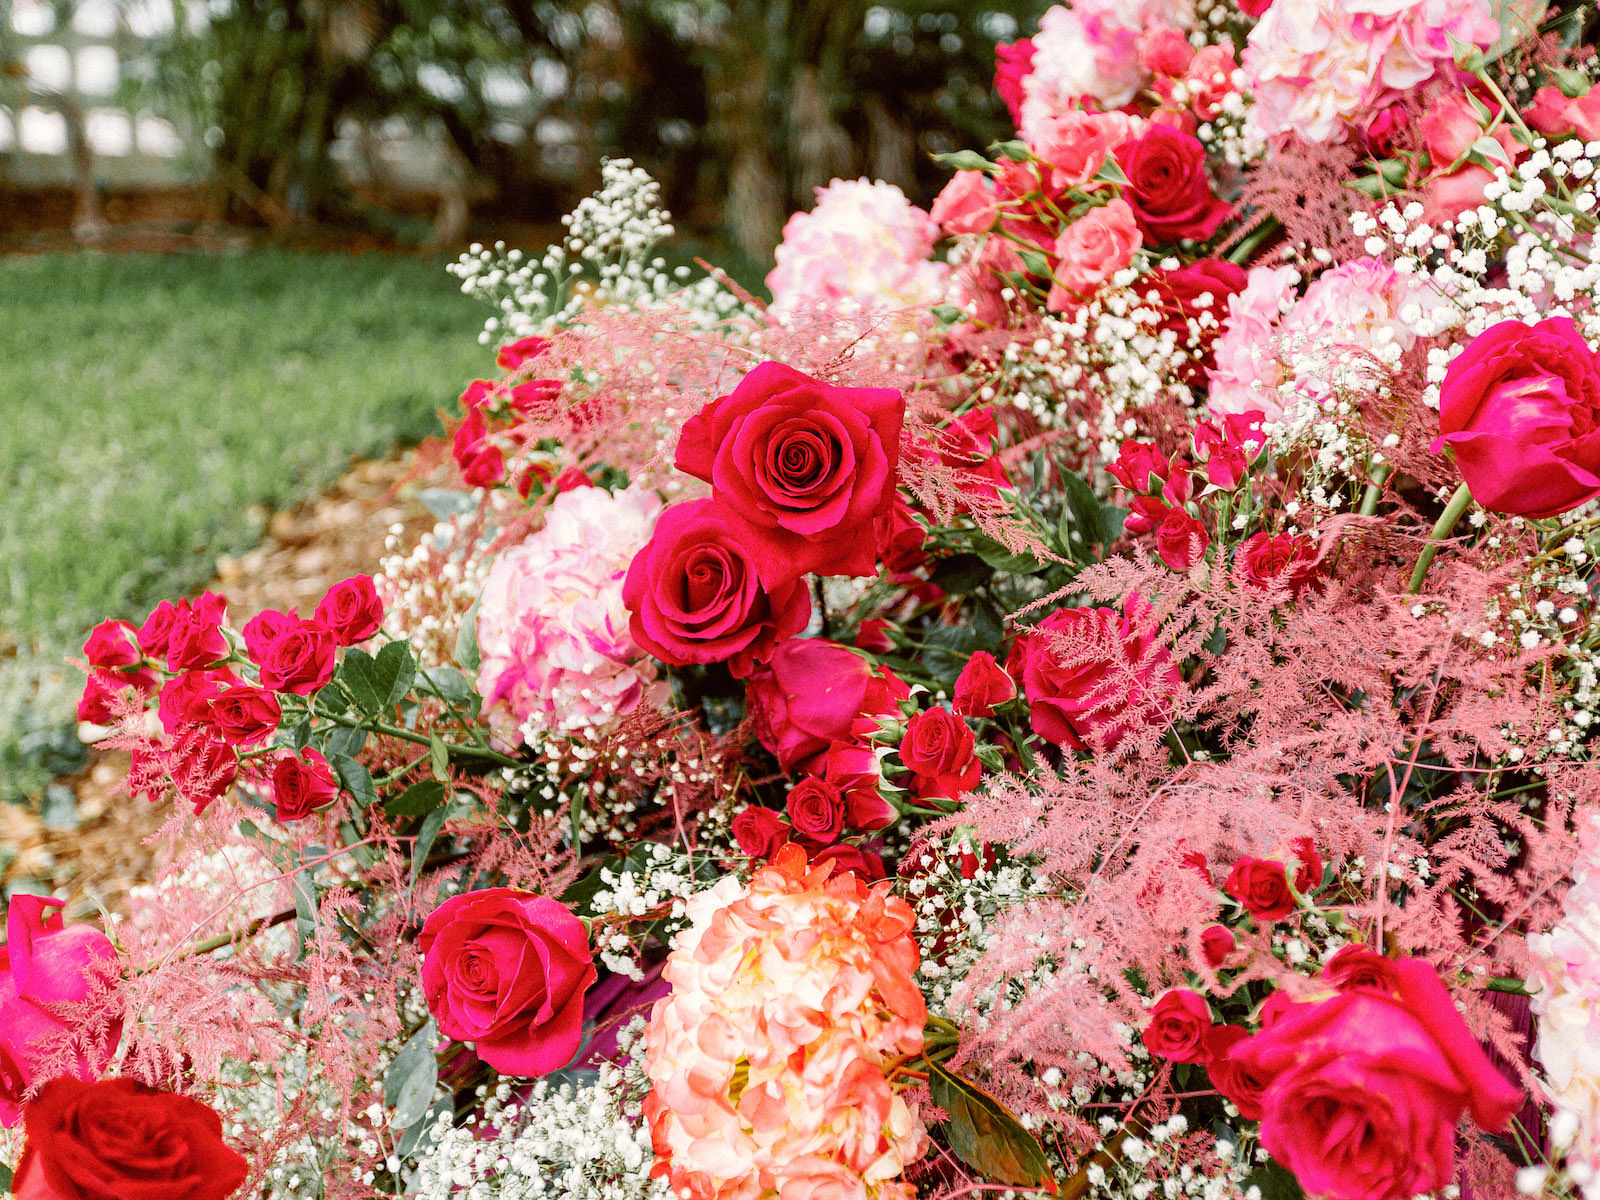 Fairytale Wedding Ceremony Decor, Lush Red, Pink Roses, Hydrangeas, Altar Flower Arrangement | Tampa Bay Wedding Photographer Dewitt for Love Photography | Wedding Florist Lemon Drops